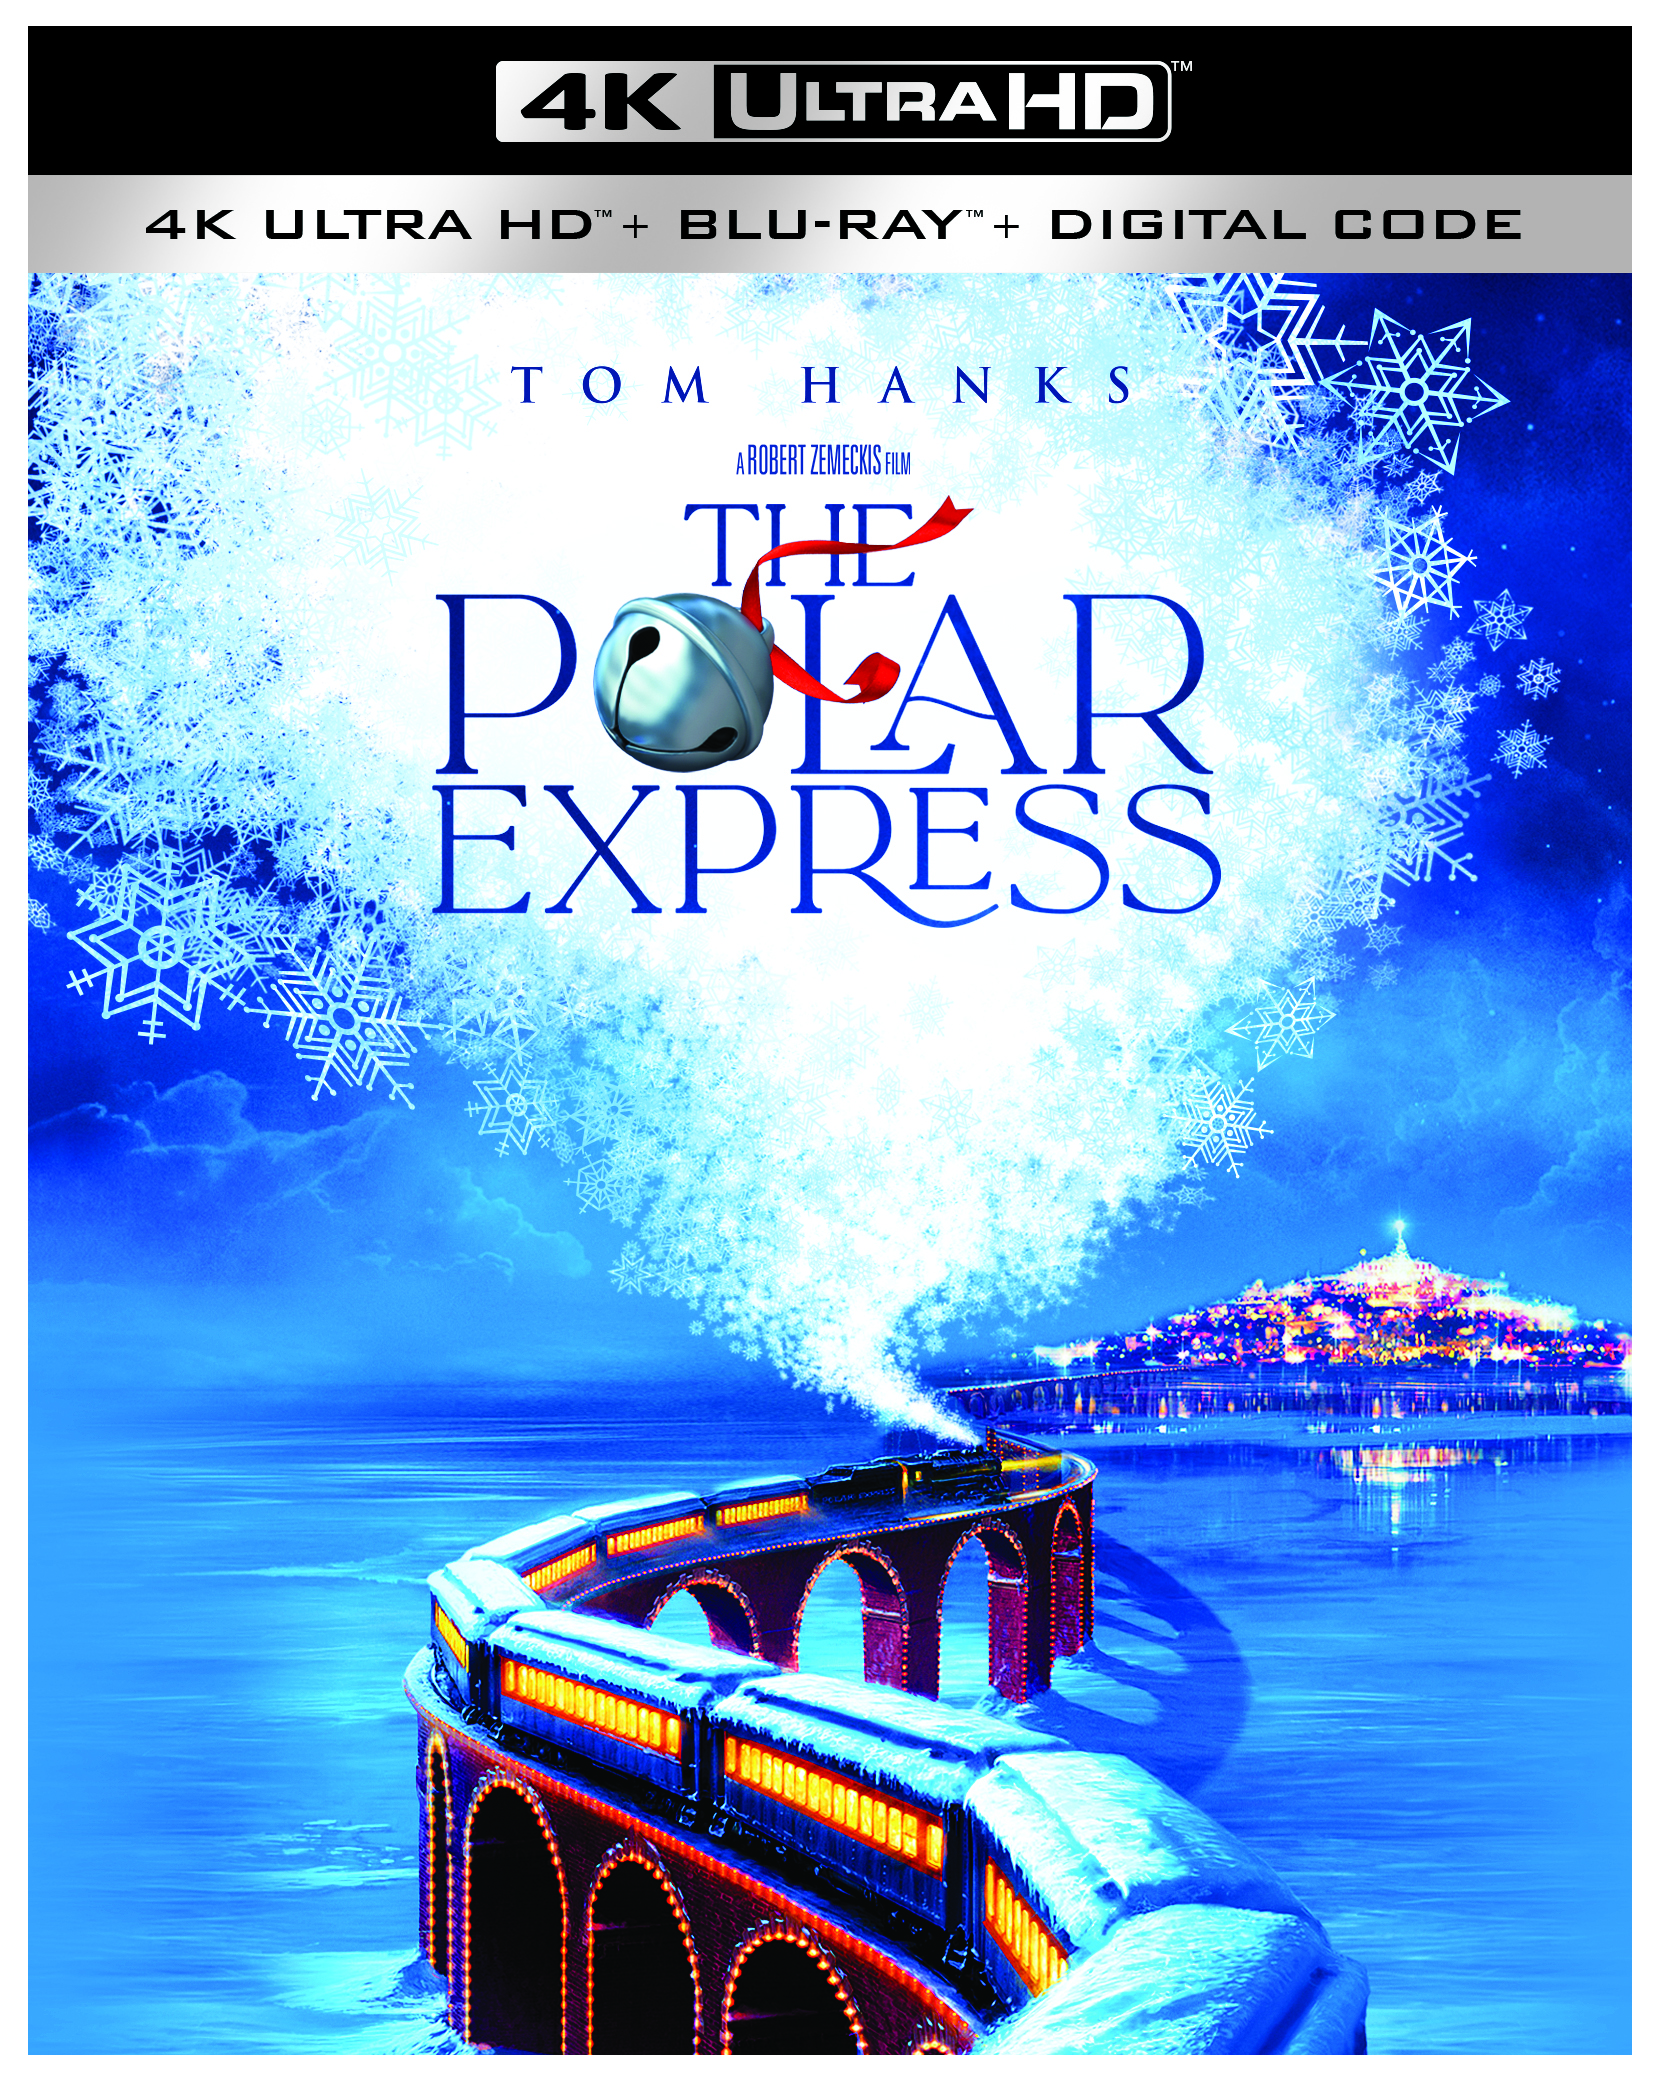 The Polar Express Review